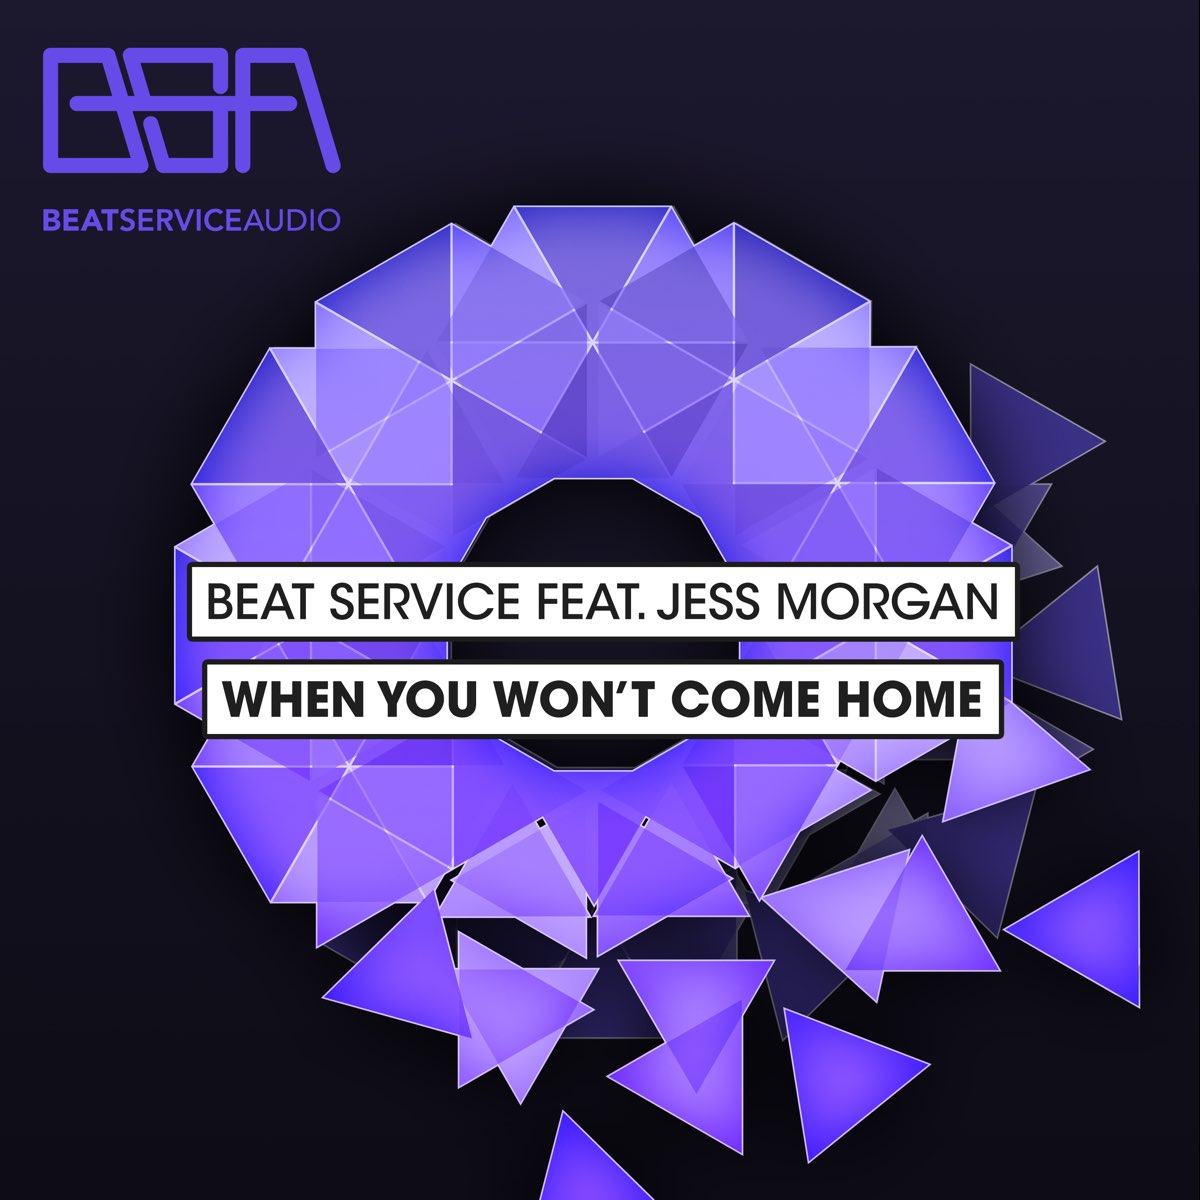 Feat jess. Jes Morgan. Битс-сервис. Whispers Beat service.